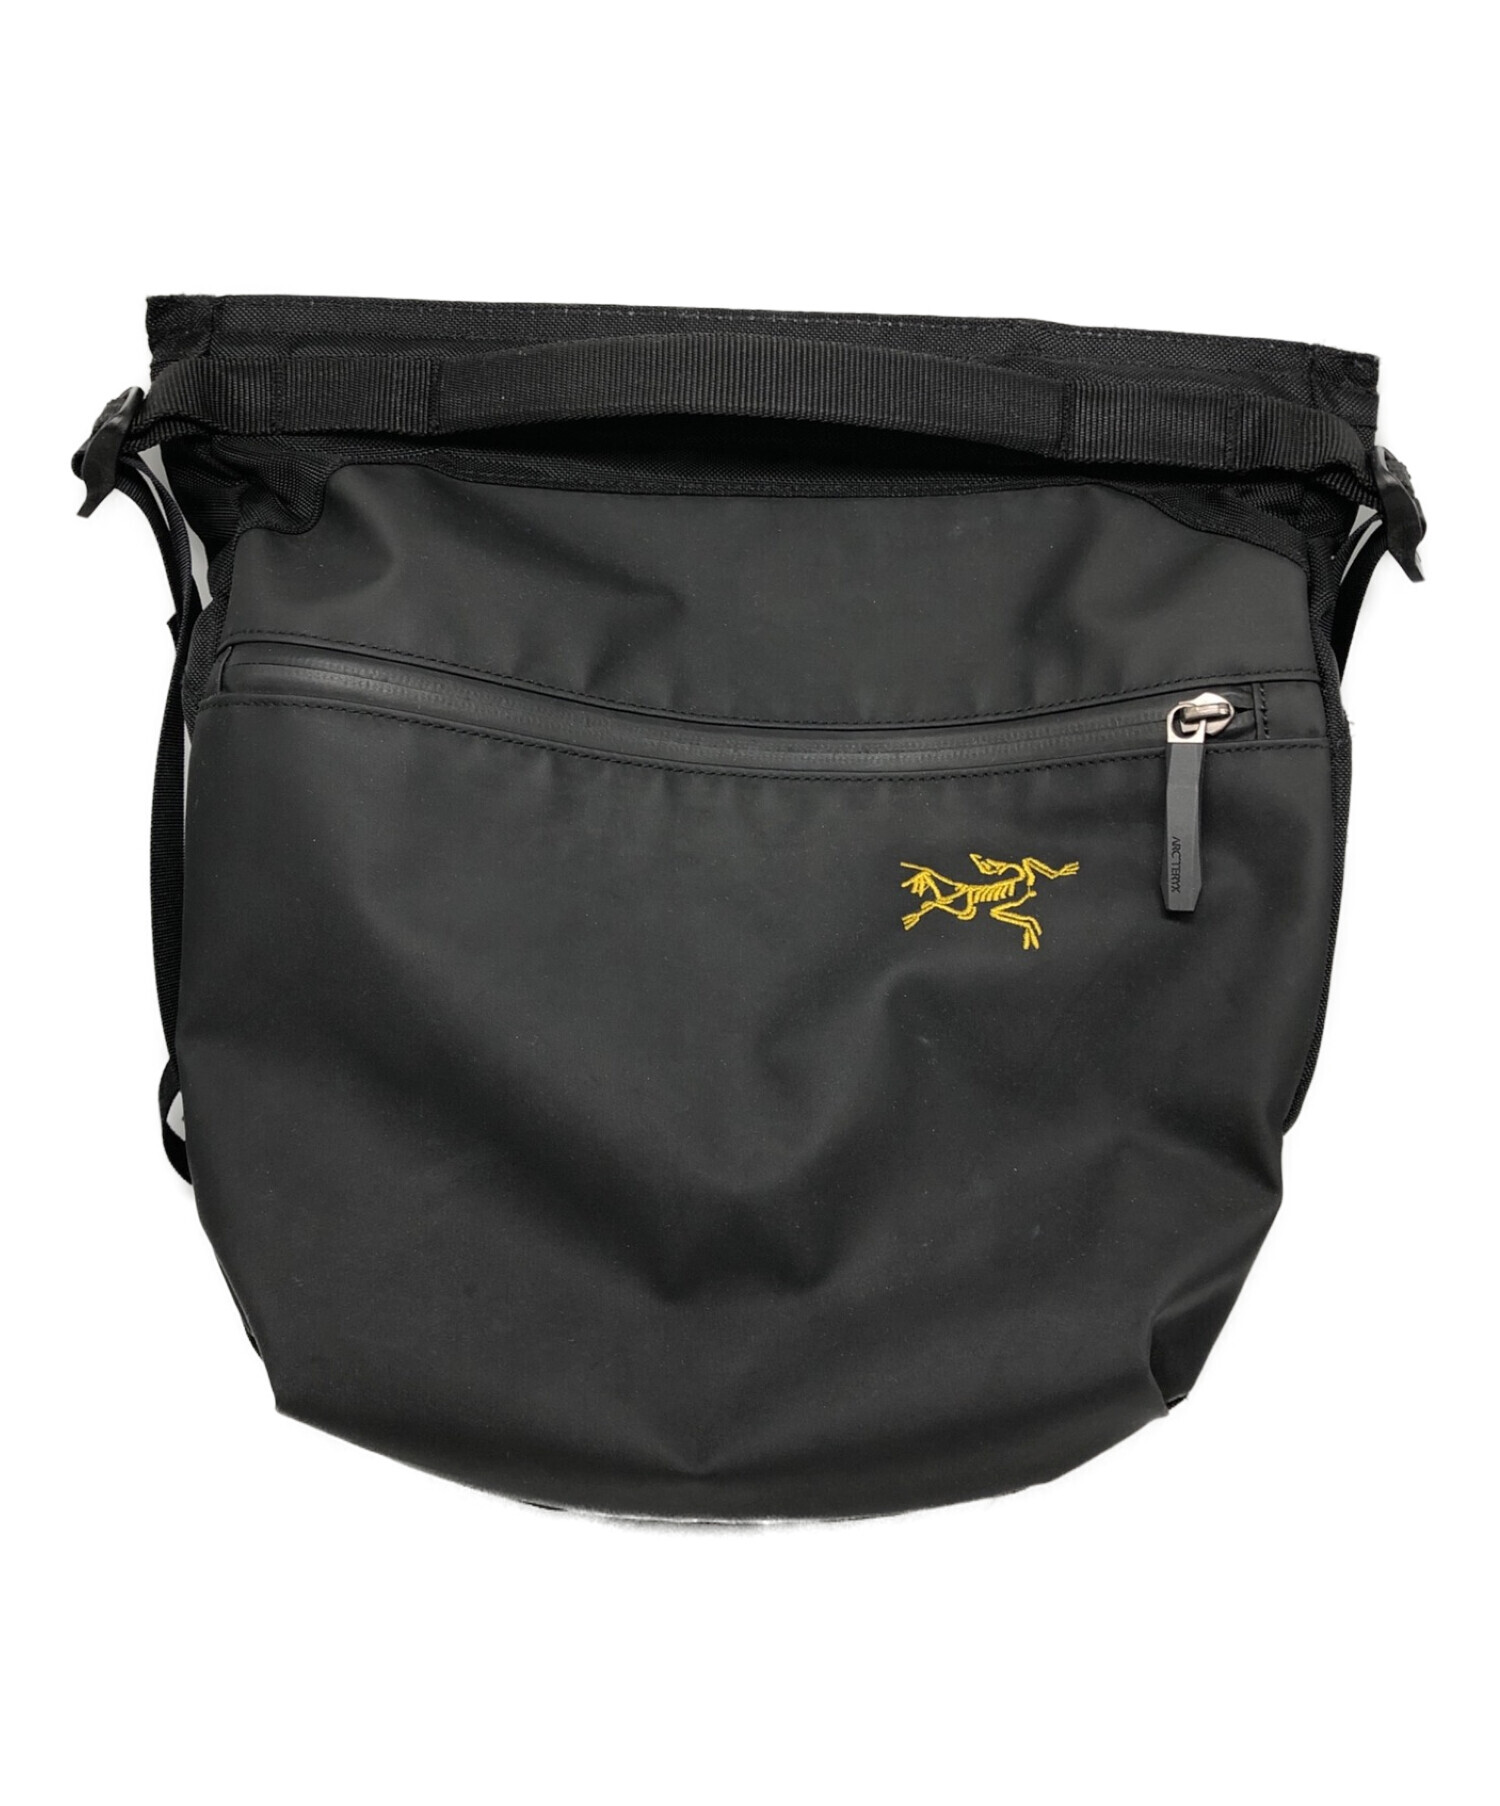 ARC'TERYX (アークテリクス) arro 8 shoulder bag ブラック